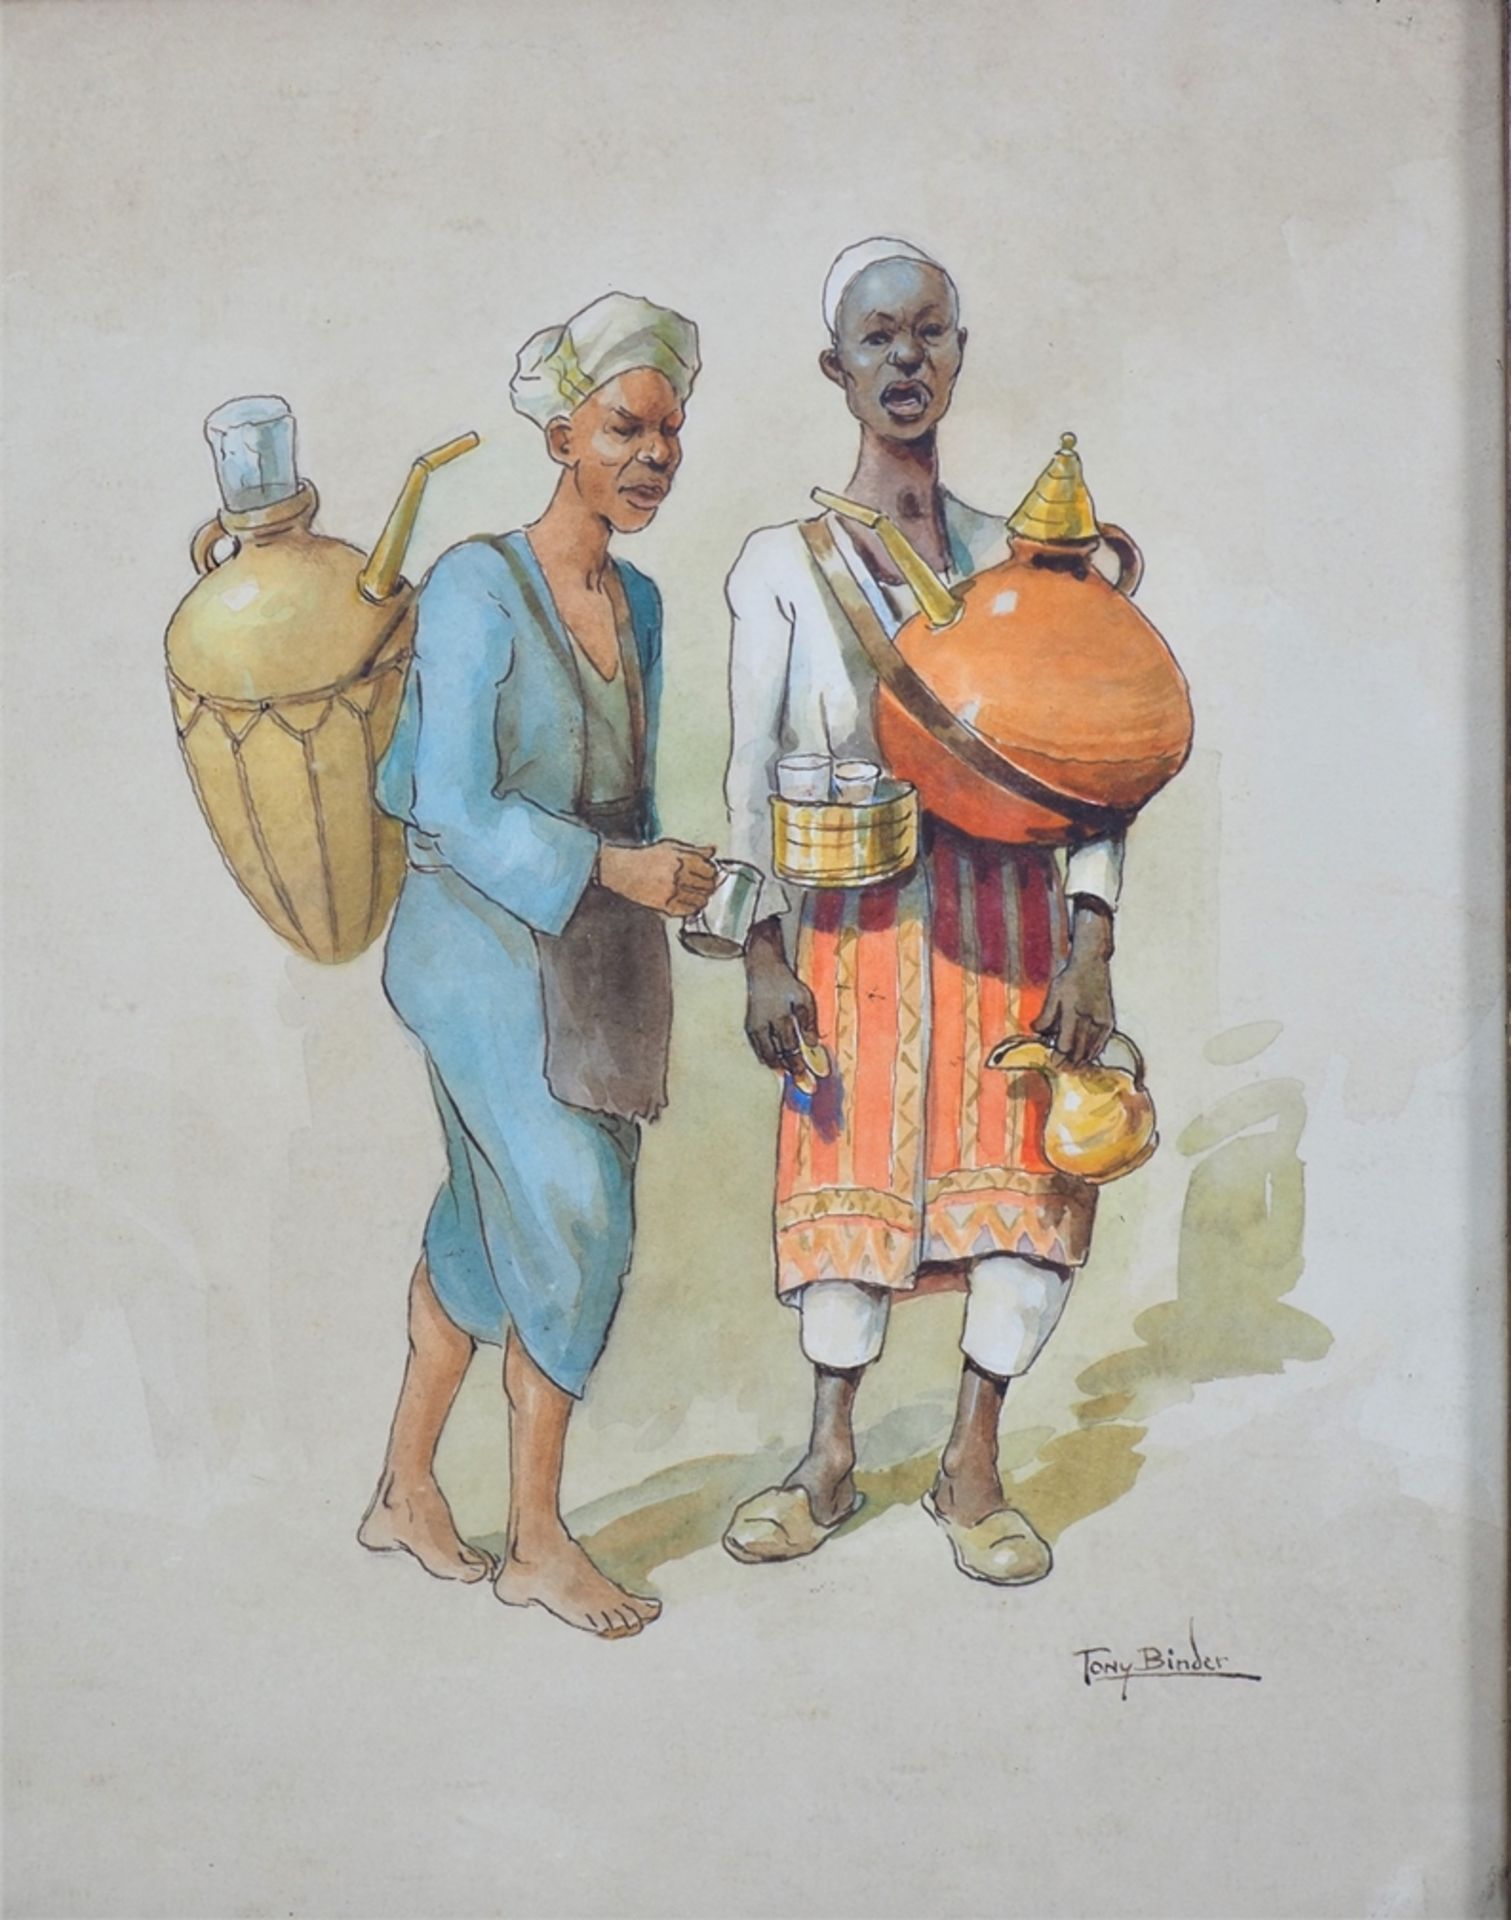 Tony Binder (1868, Vienna - 1944, Nördlingen) - African Tea Vendors